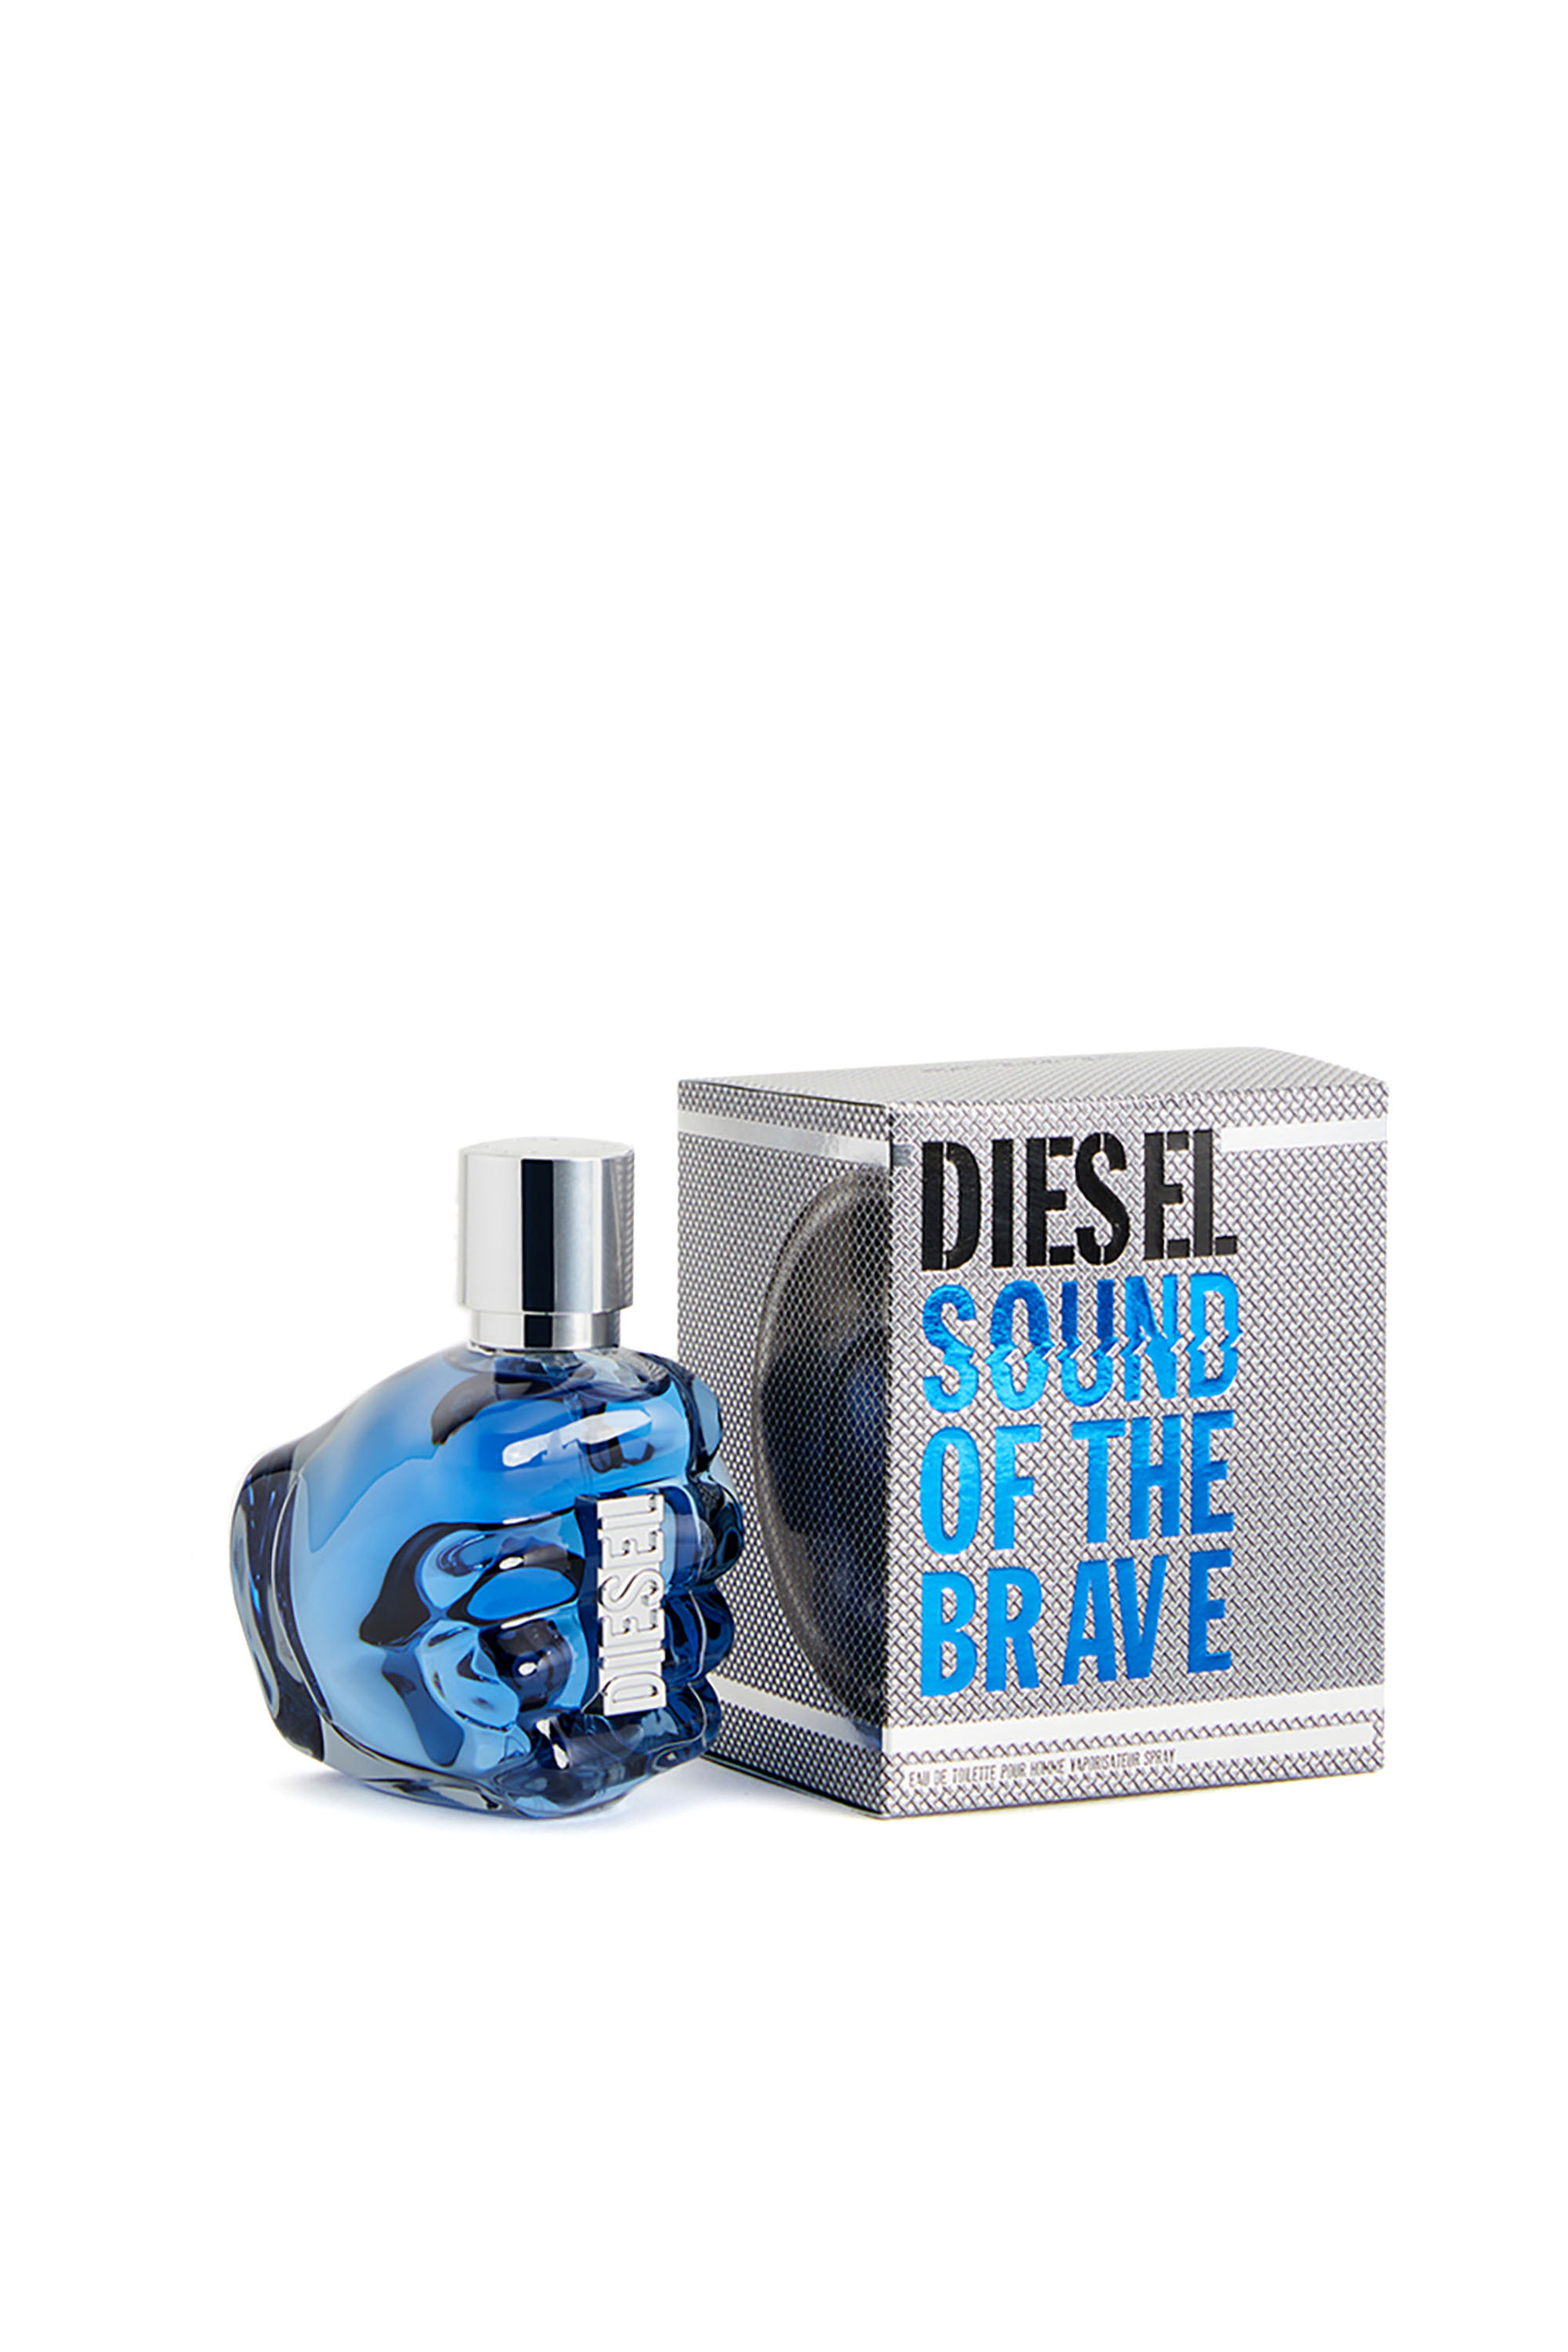 Diesel - SOUND OF THE BRAVE 35ML, Blau - Image 2